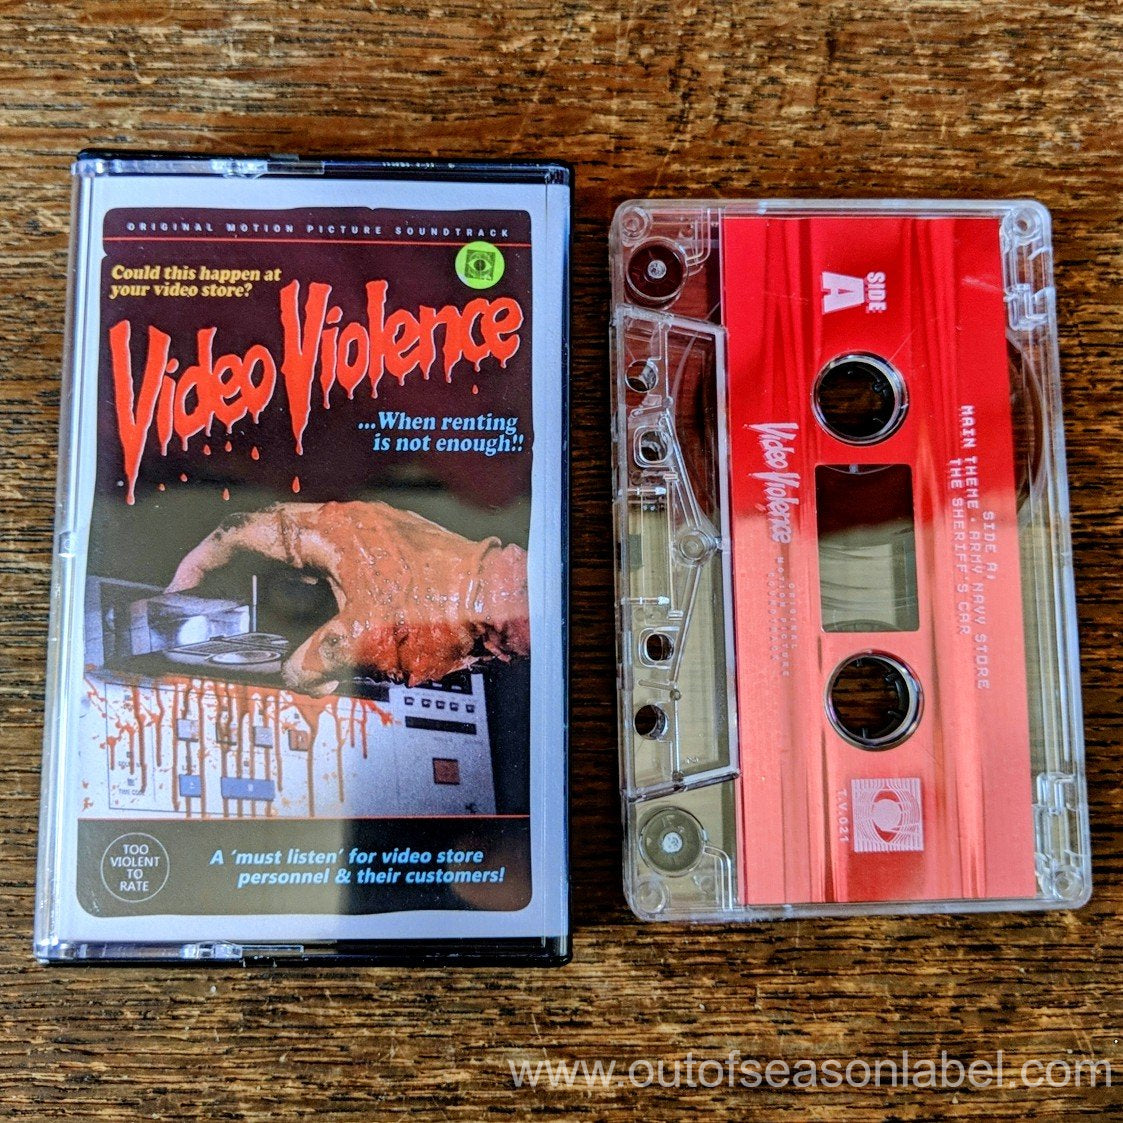 [SOLD OUT] VIDEO VIOLENCE "Original Motion Picture Soundtrack" Cassette Tape